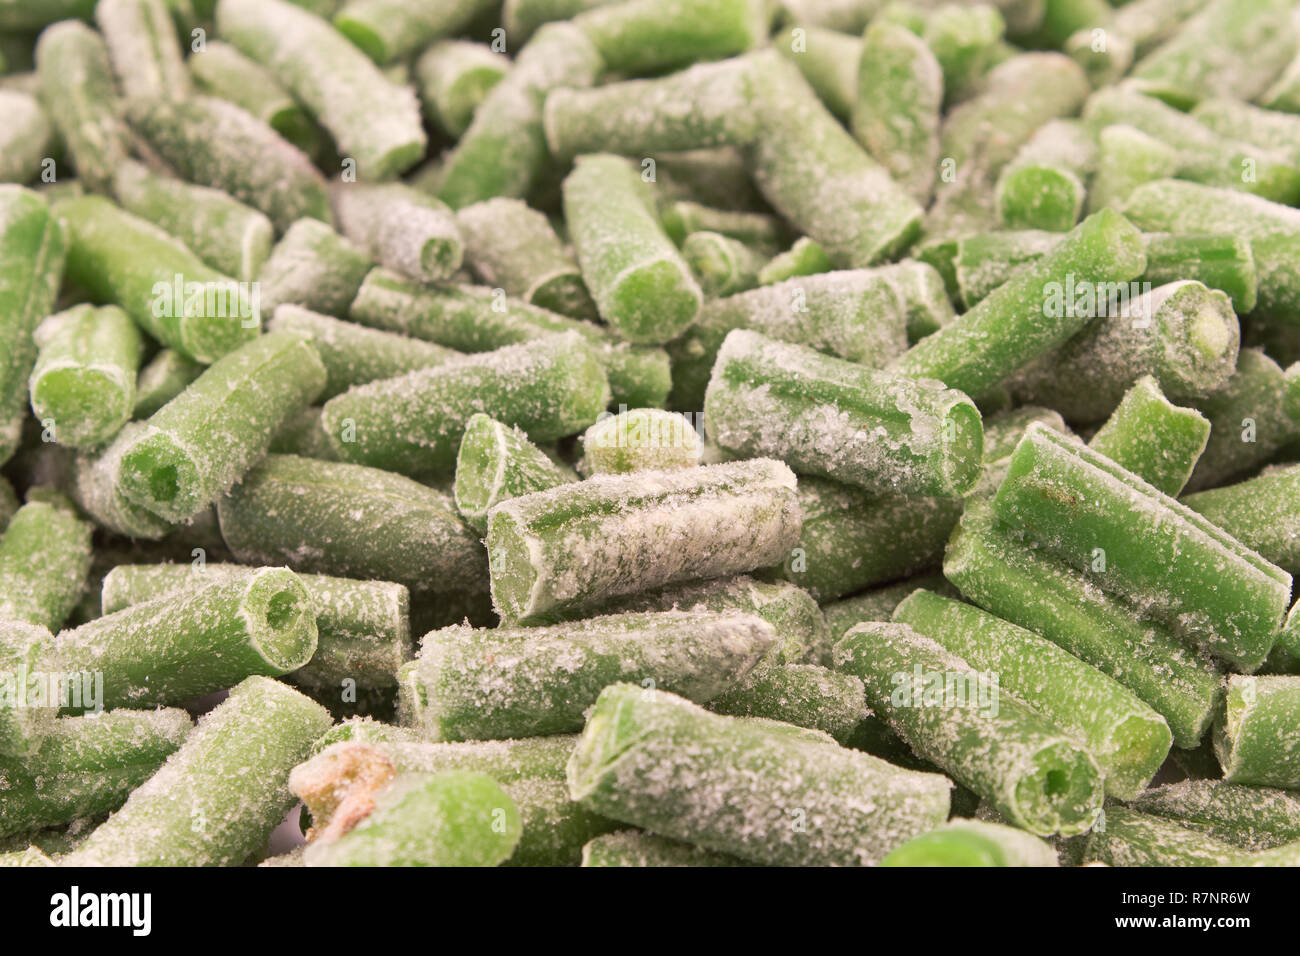 Frozen green beans vegetableheap  as background Stock Photo